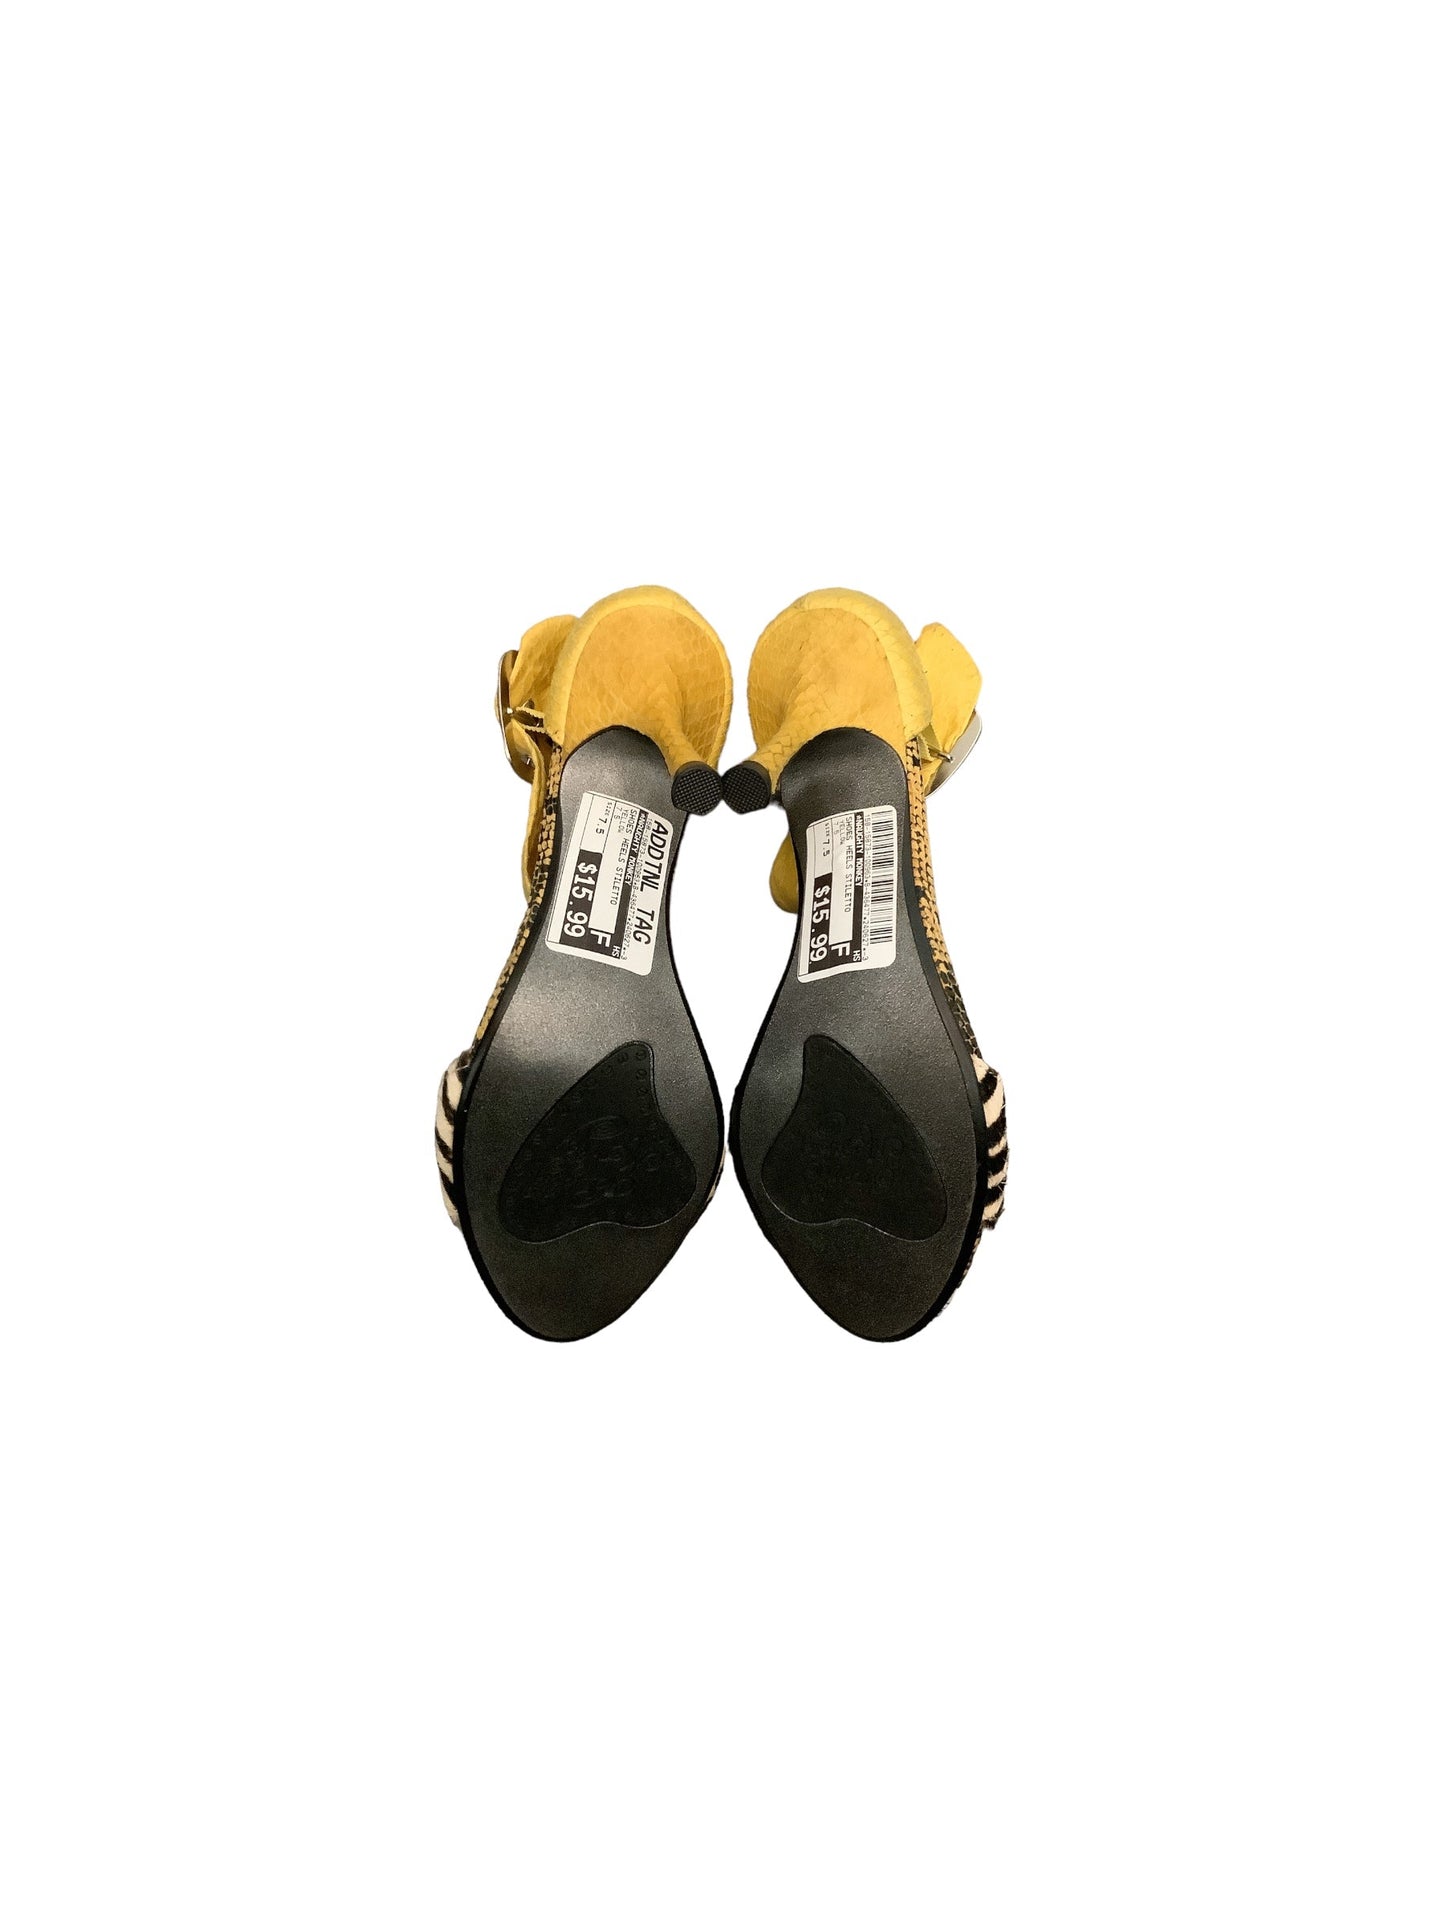 Yellow Shoes Heels Stiletto Naughty Monkey, Size 7.5